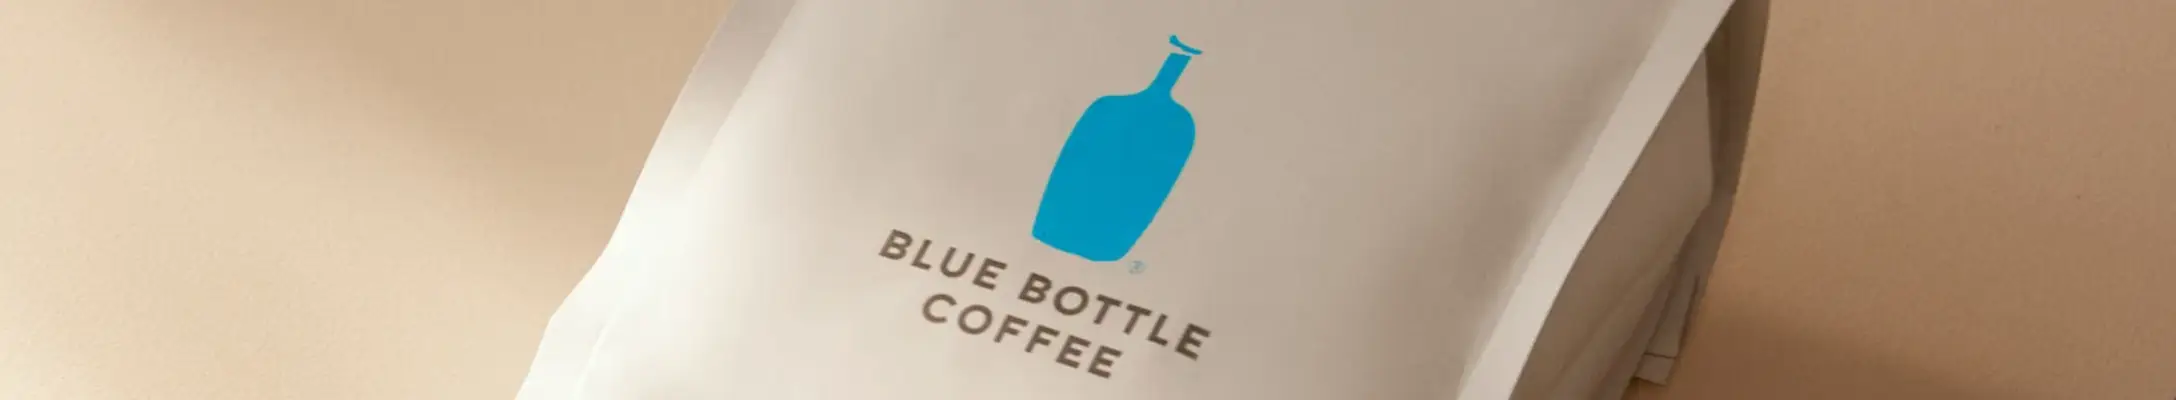 Blue bottle coffee logo on a coffee bag